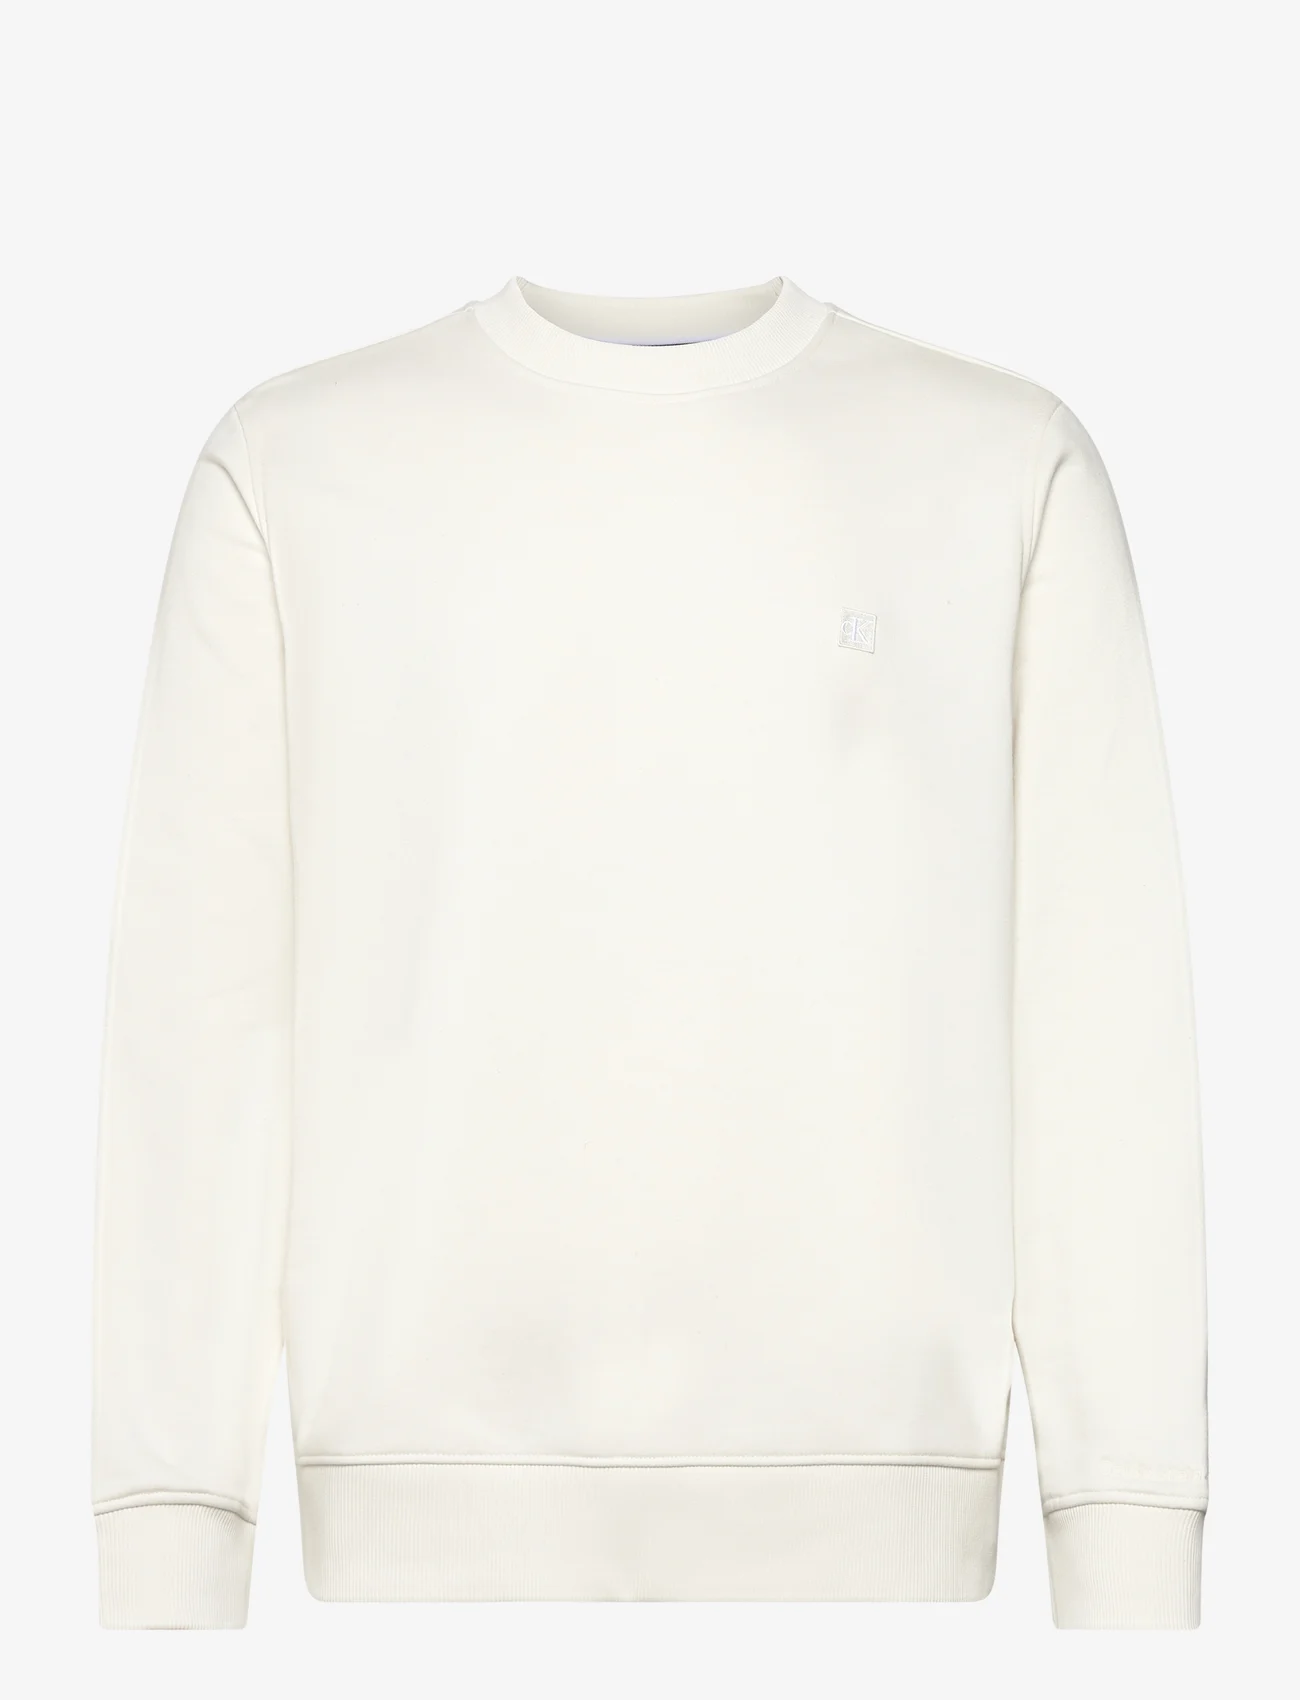 Calvin Klein Jeans - CK EMBRO BADGE CREW NECK - sweatshirts - ivory - 0